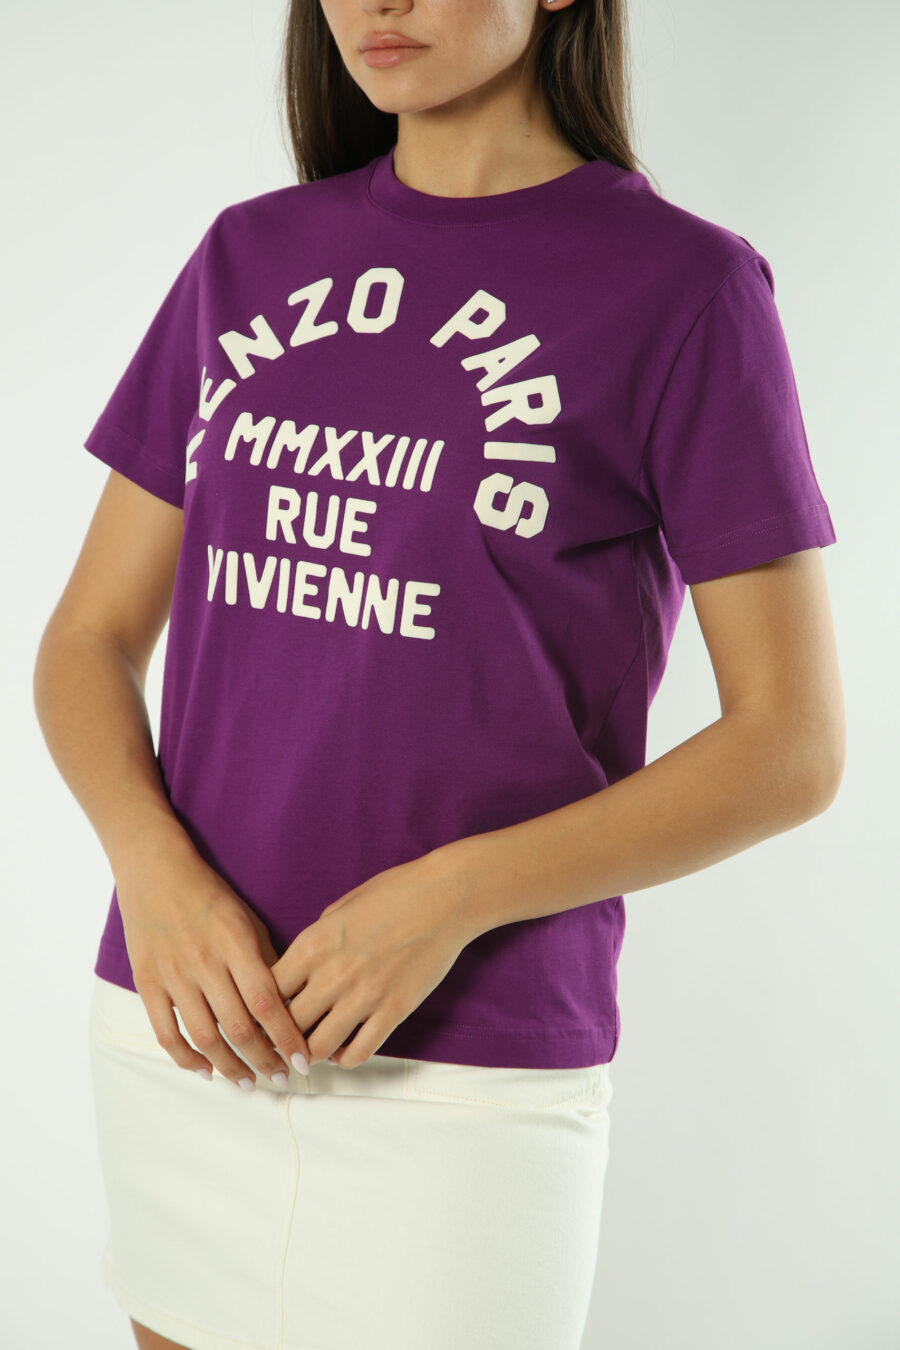 T-shirt lila mit weißem "rue vivienne" maxilogo - Fotos 1355